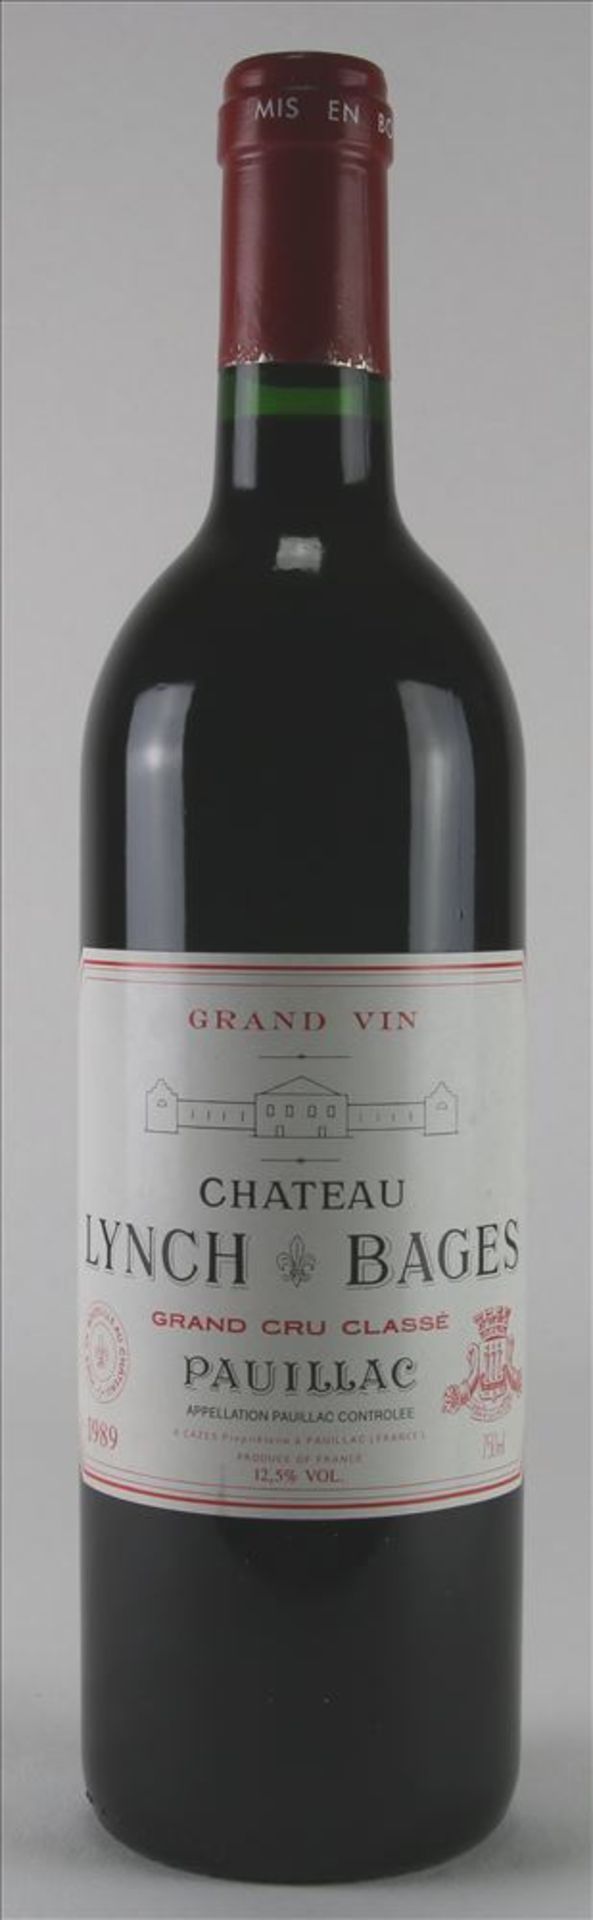 Flasche Chateau Lynch-Bages 1989 Pauillac, 0,75 Liter. Füllstand Mitte Hals, Kapsel intakt. Im